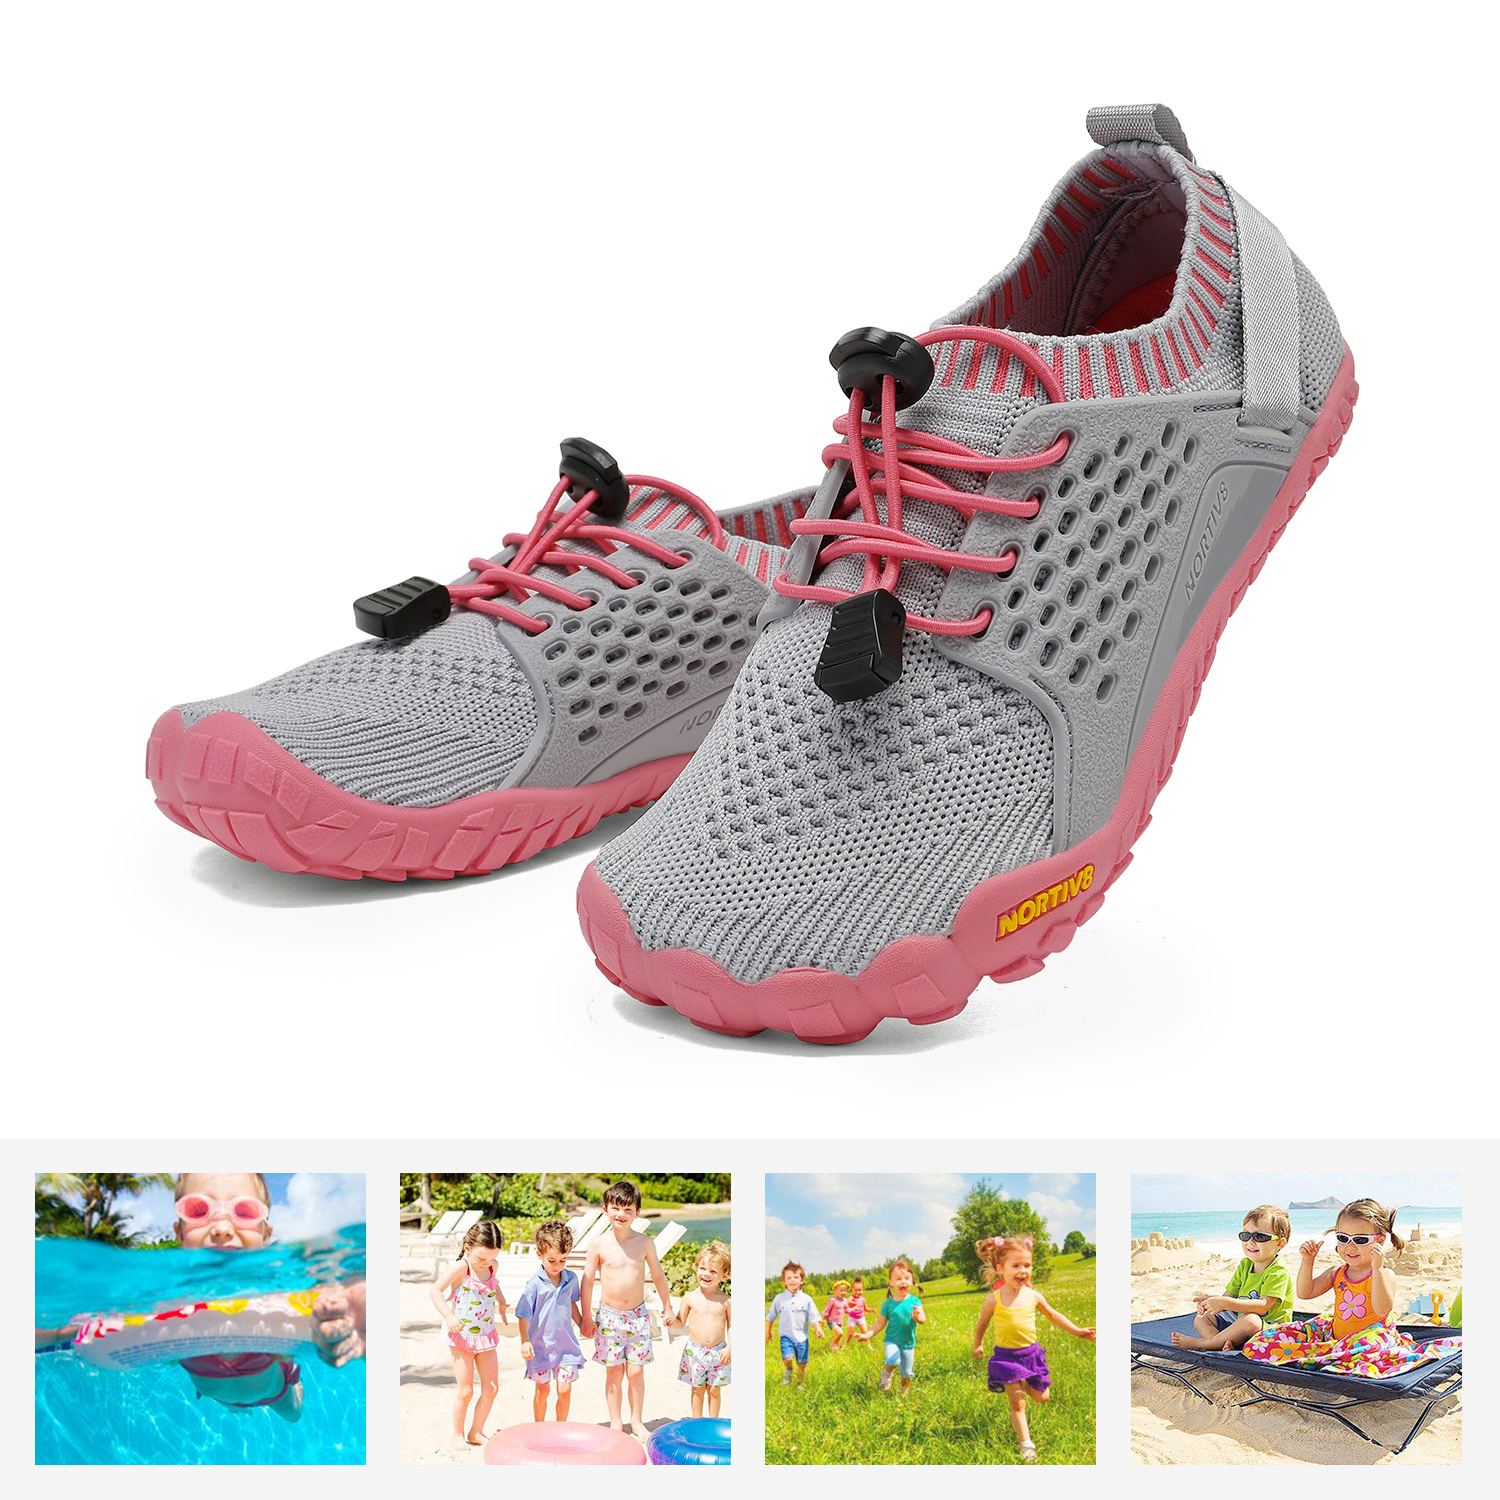 Nortiv 8 Kids Water Shoes Boys & Girls Comfort Aqua Shoes Quick Dry Barefoot Swim Diving Sports Shoes Aqua-K2 Light/Grey/Watermelon/Red Size 6 - image 5 of 5